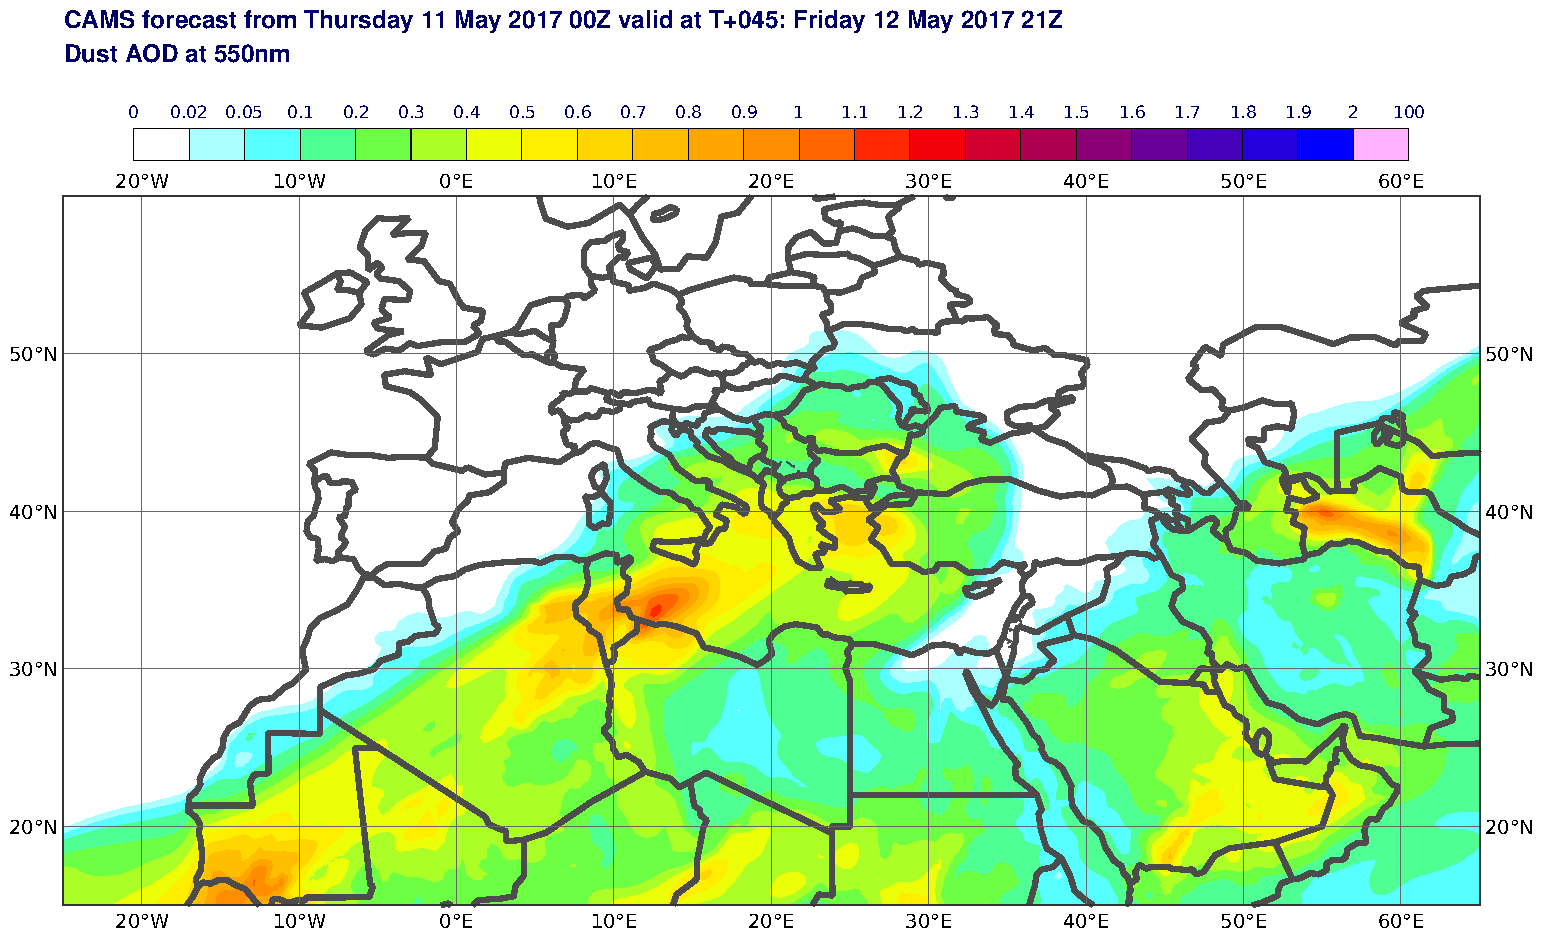 Dust AOD at 550nm valid at T45 - 2017-05-12 21:00